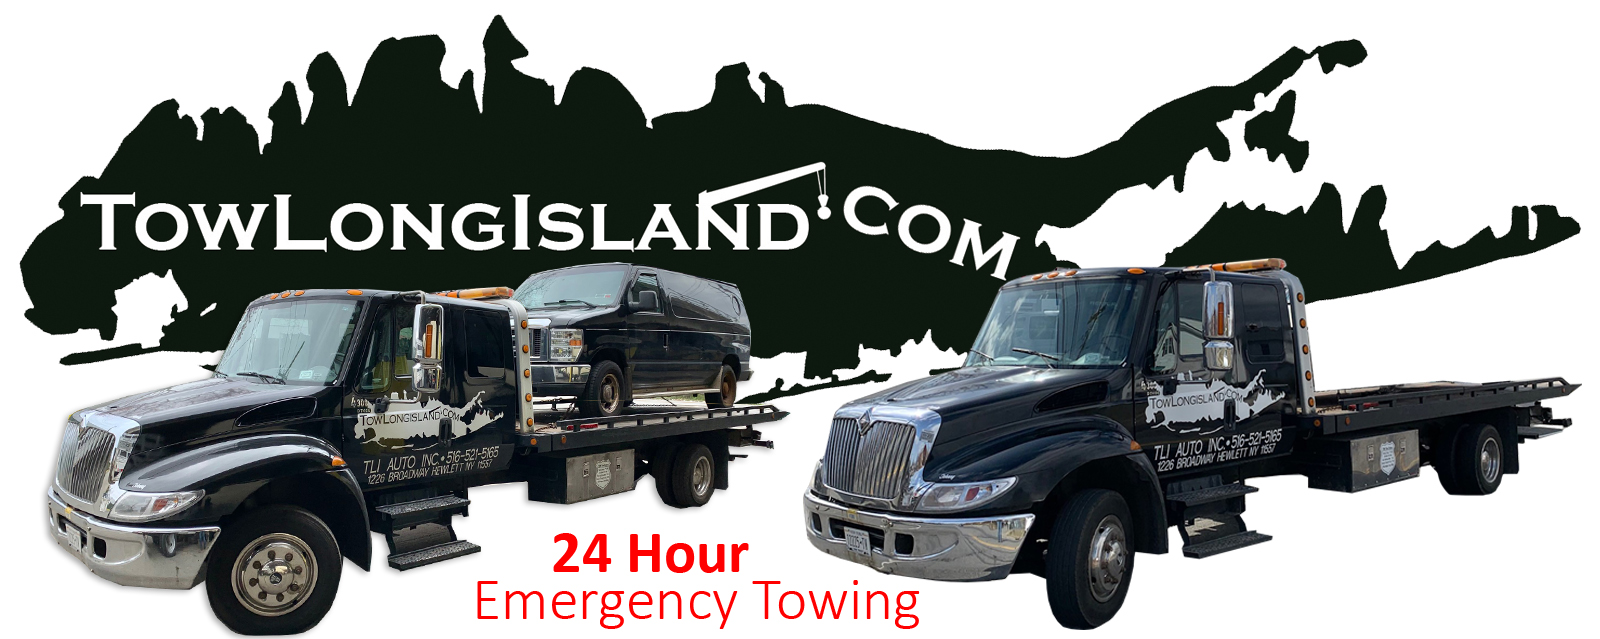 24 Hour Towing Service | Roosevelt, Long Island, Nassau County, New York | TowLongIsland.com 516.521.5165